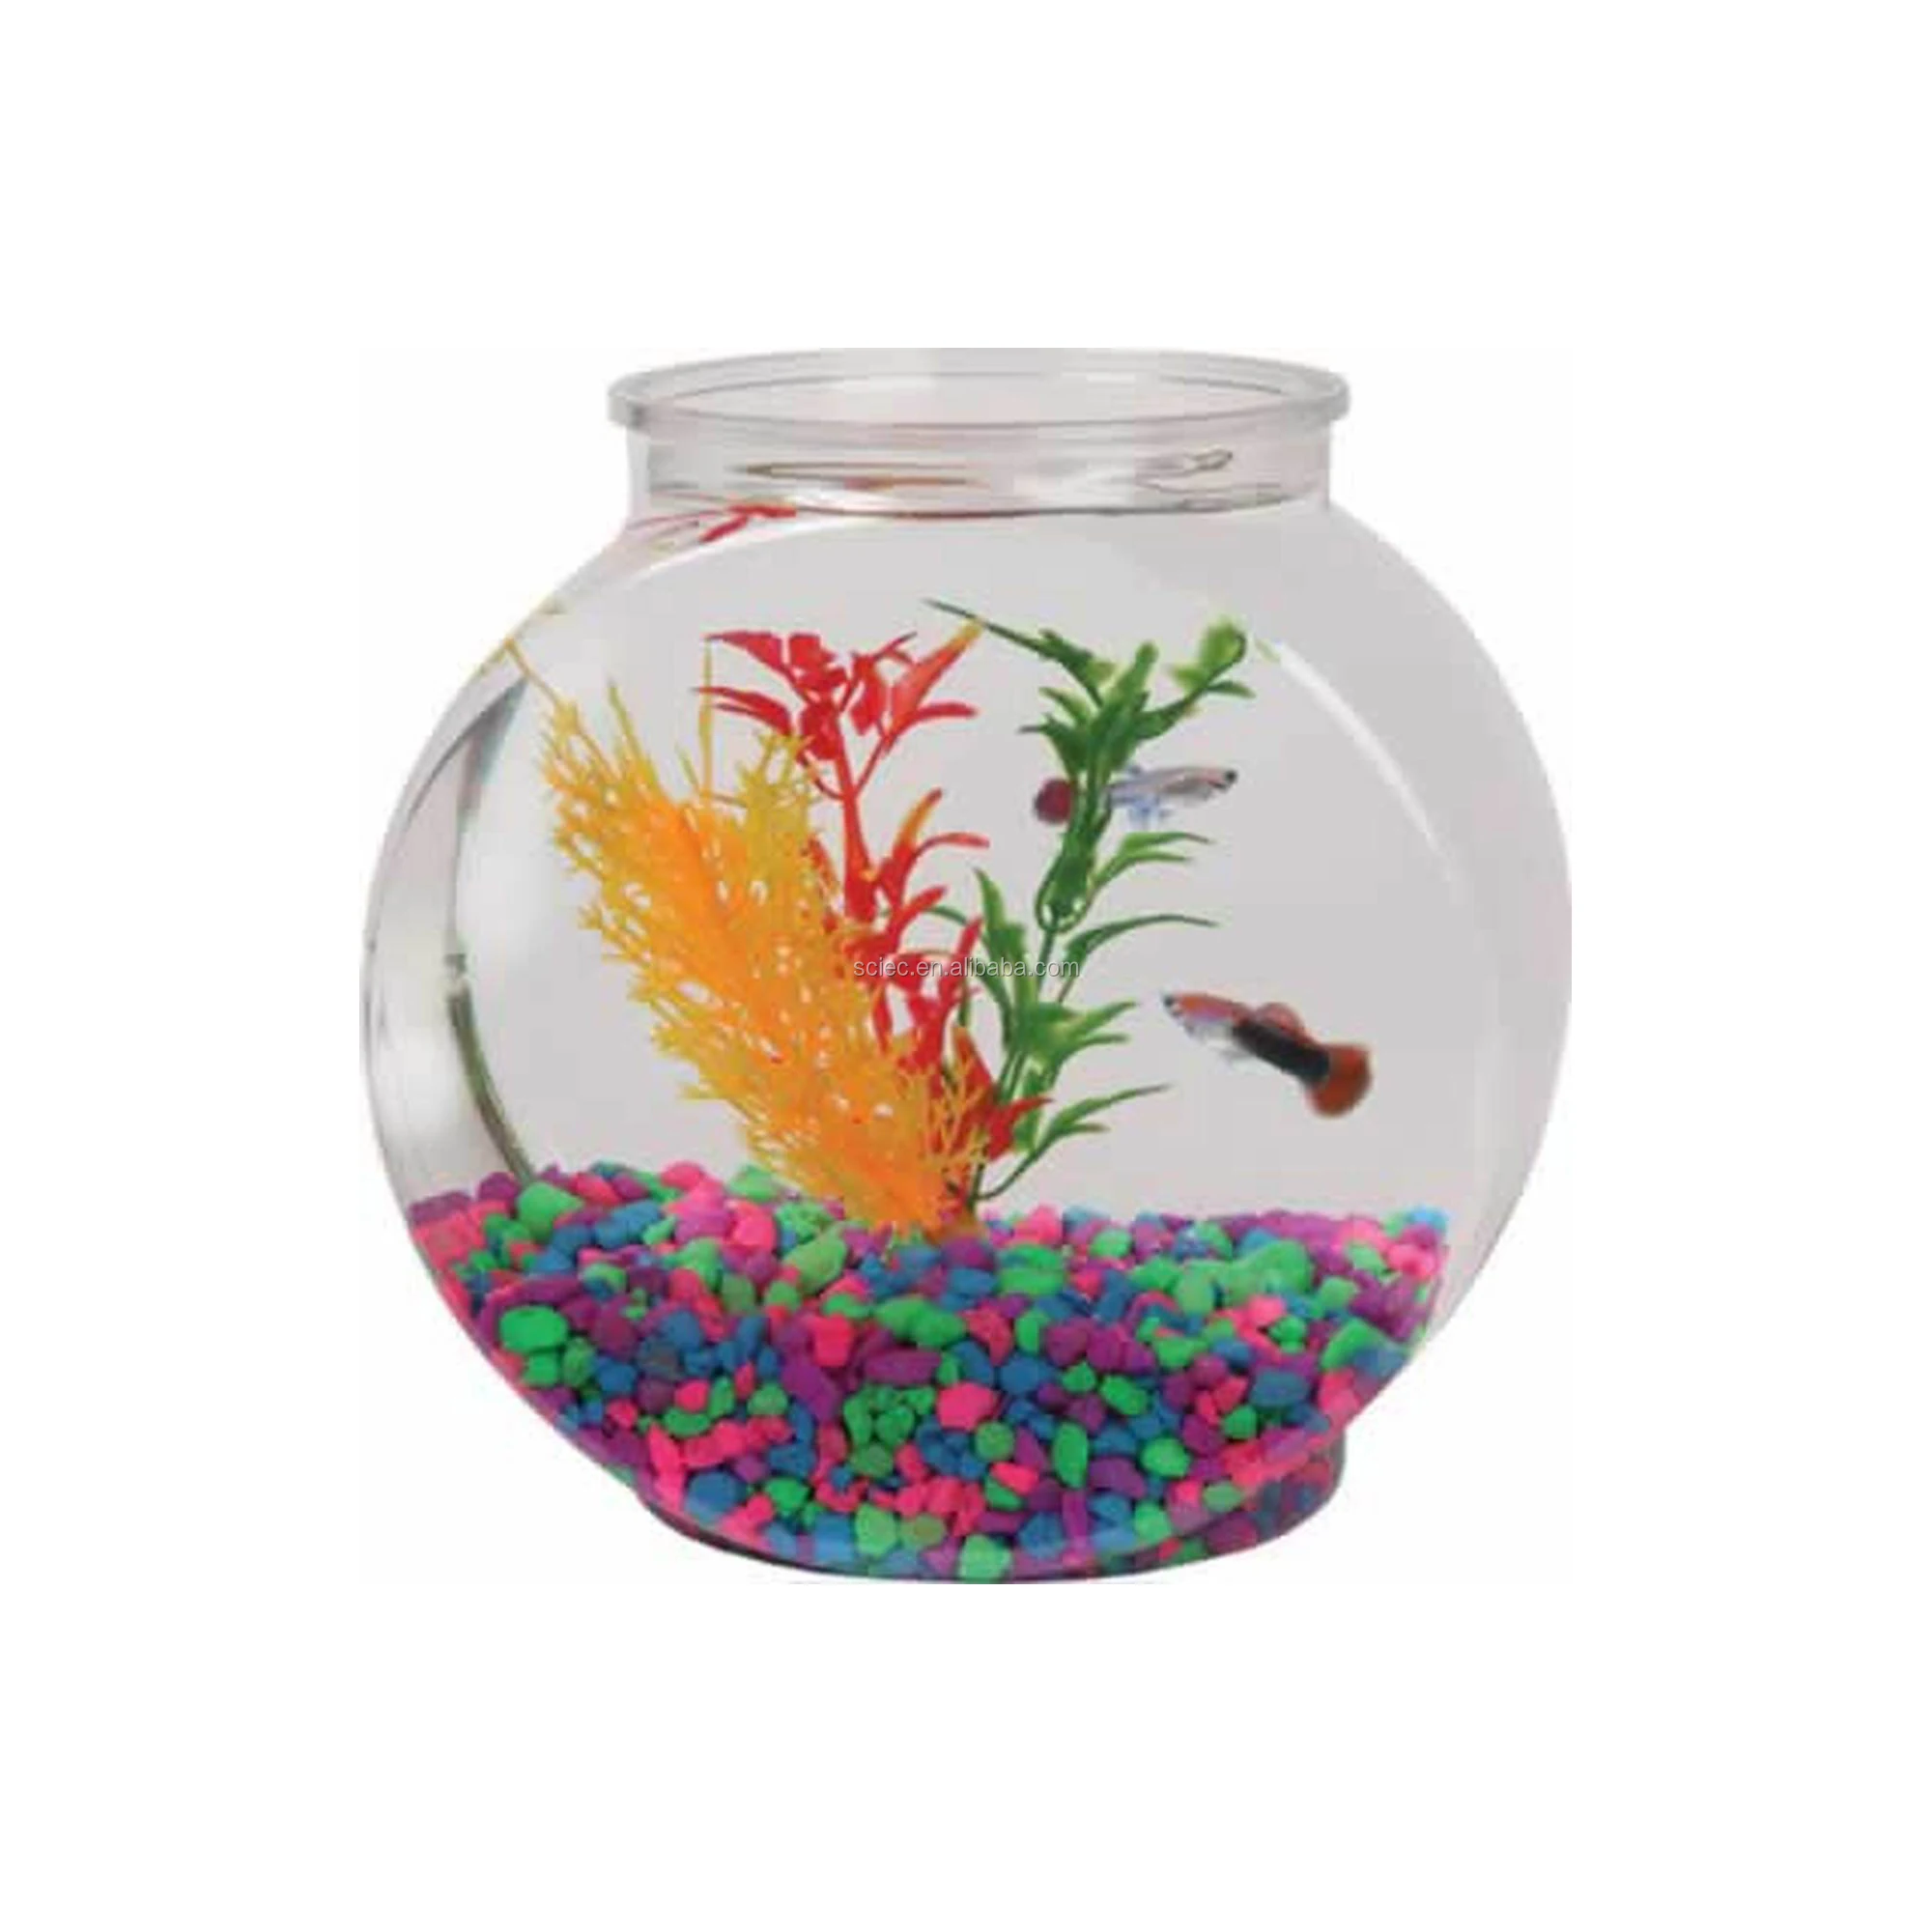 Home Decoration 0.5/1/2/3 Gallon Drum Shaped Shatterproof Glass Fish Bowl F...